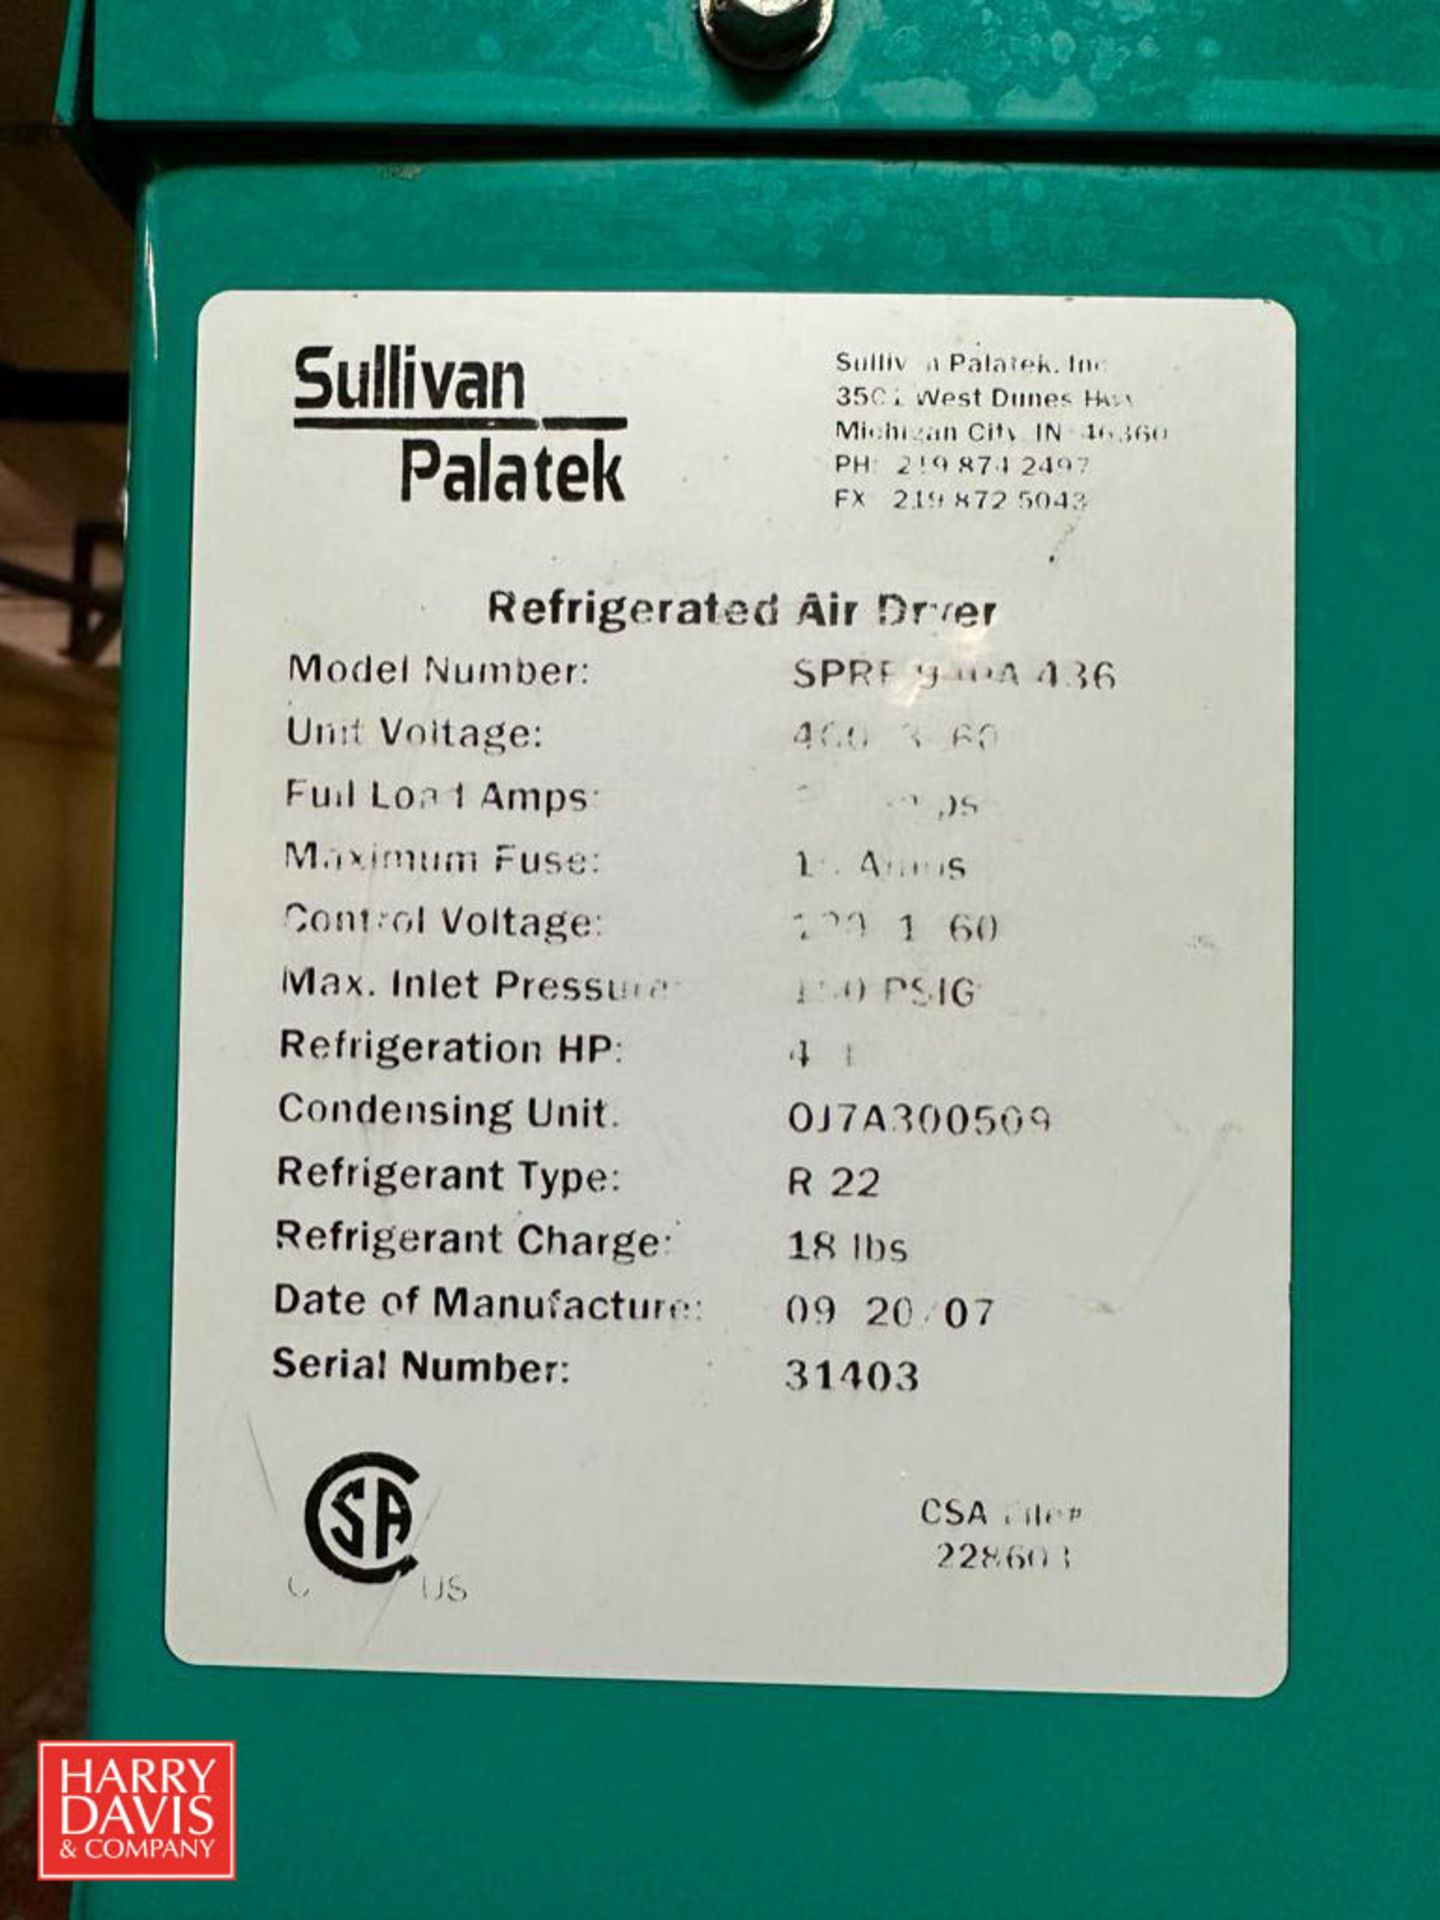 Sullivan Palatek Refrigerated Air Dryer, Model : SPRF140A436, S/N: 31403 - Rigging Fee: $600 - Image 2 of 2